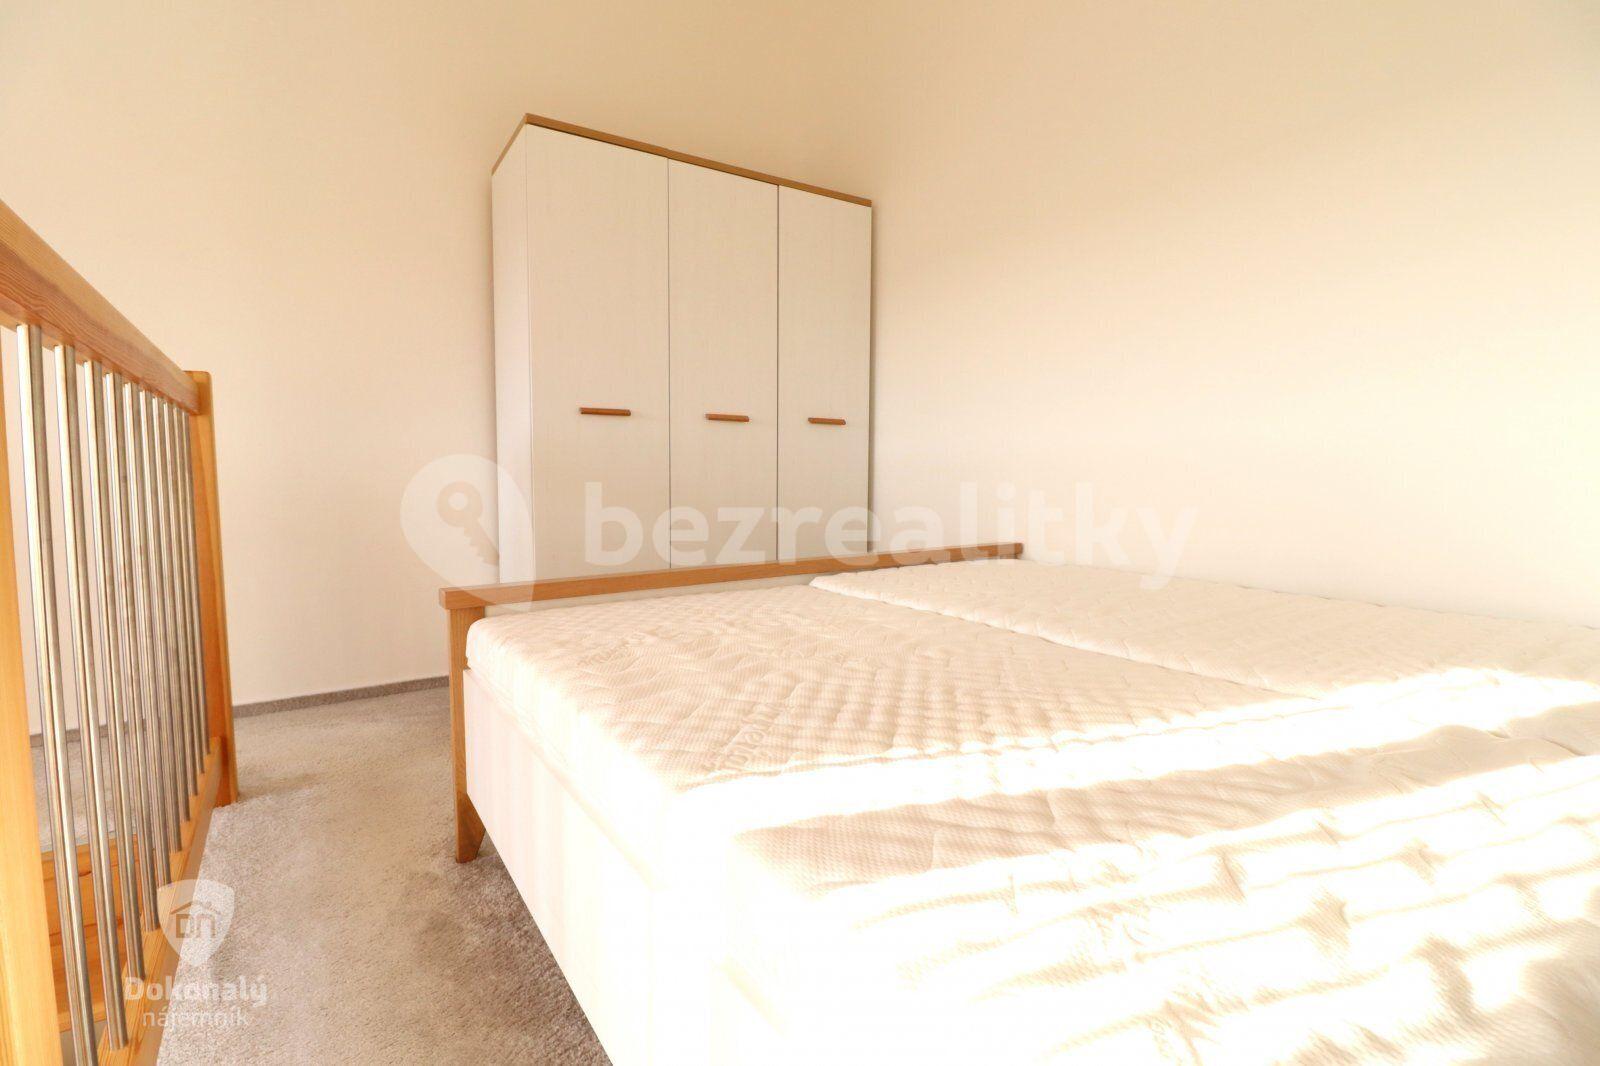 1 bedroom with open-plan kitchen flat to rent, 39 m², Herejkova, Starý Plzenec, Plzeňský Region